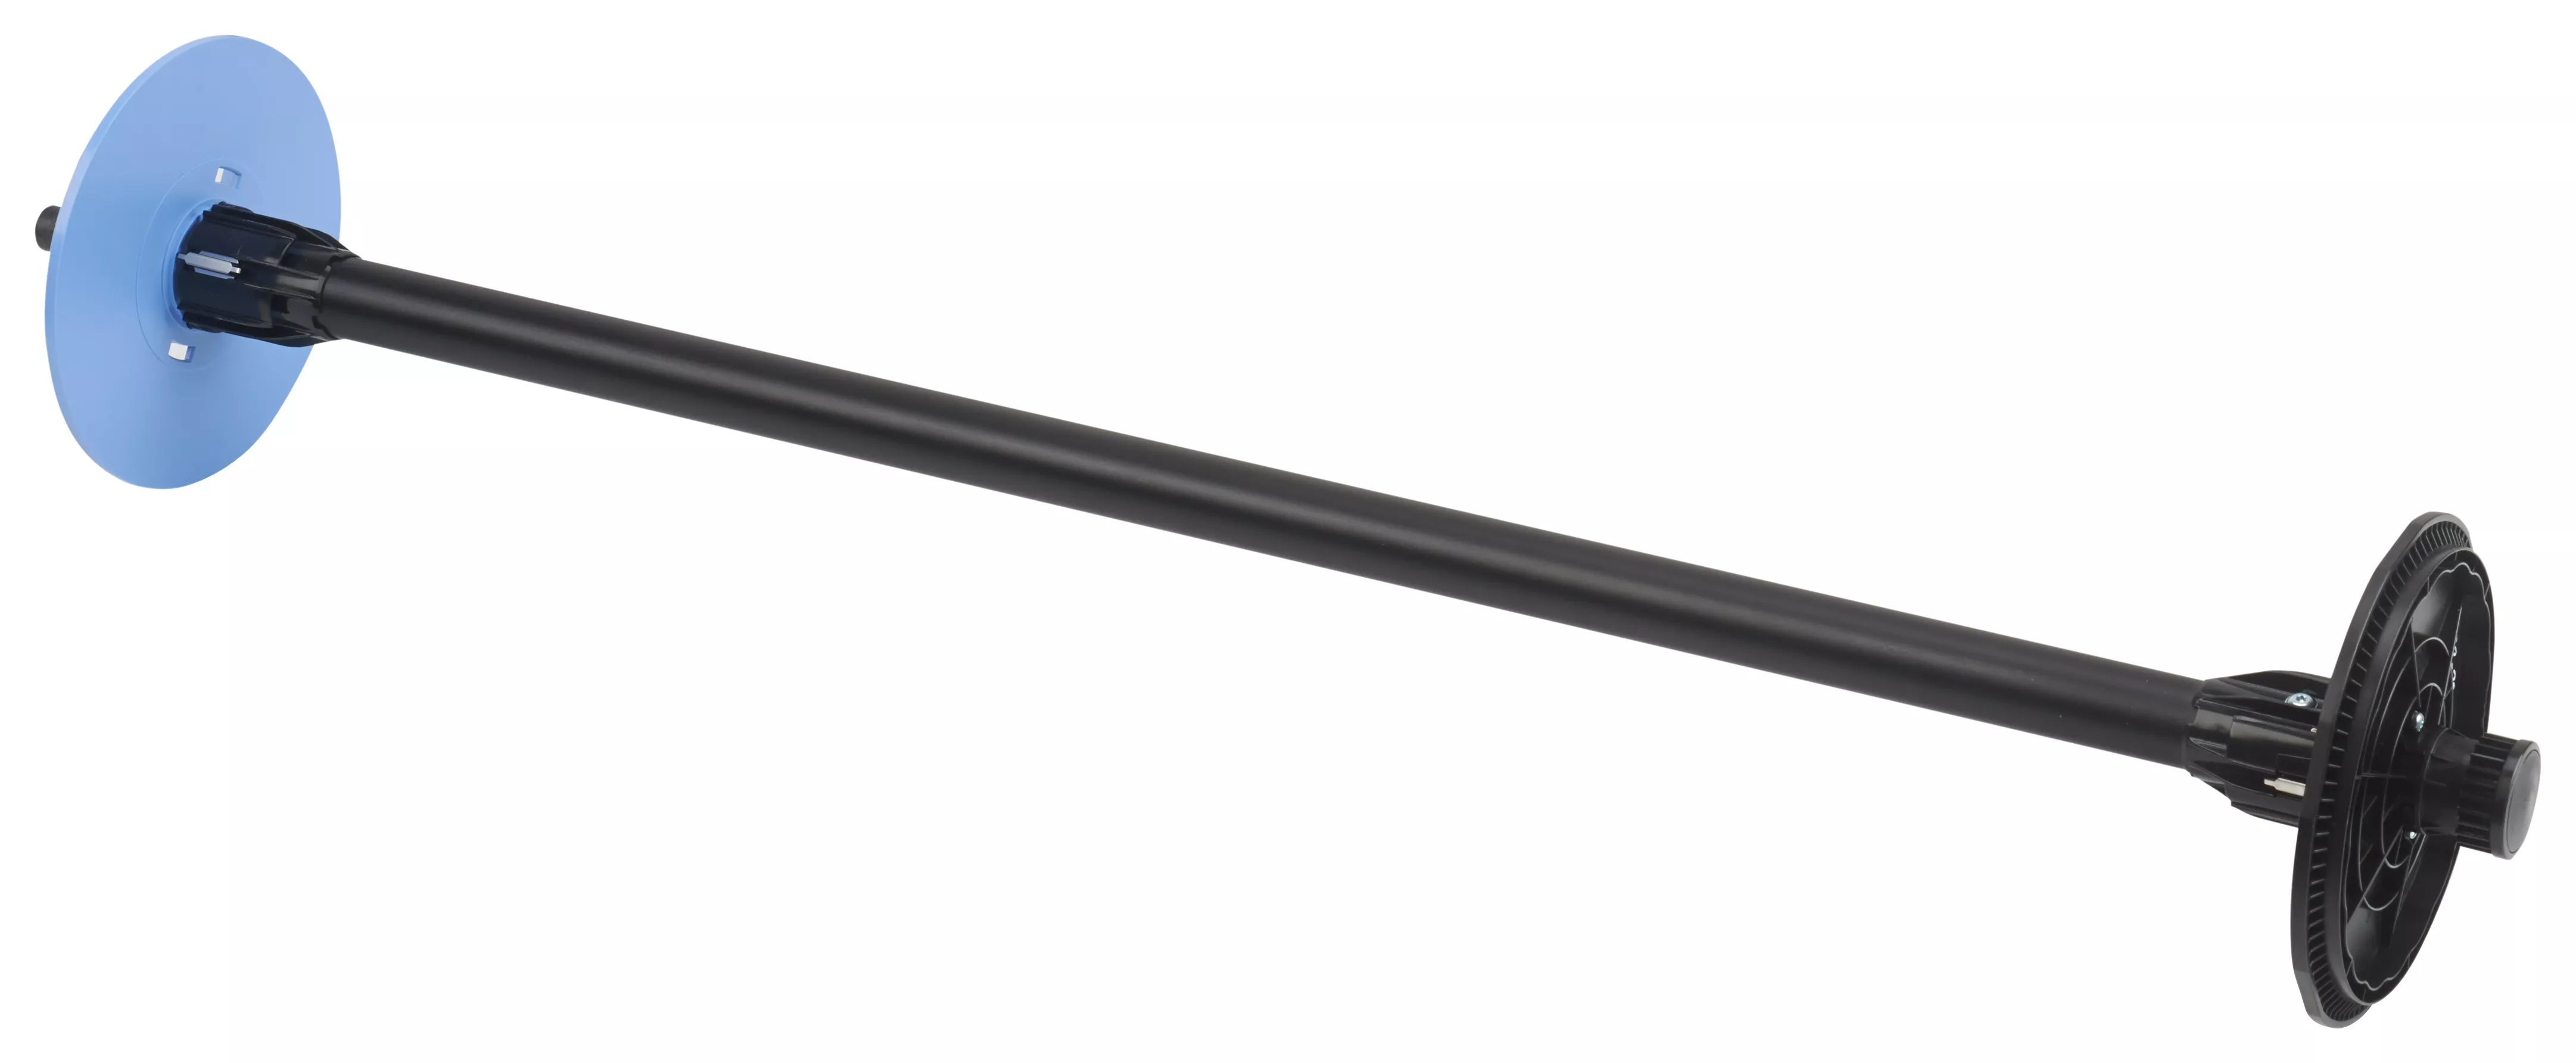 Vente HP DesignJet 36-inch Rollfeed Spindle HP au meilleur prix - visuel 4